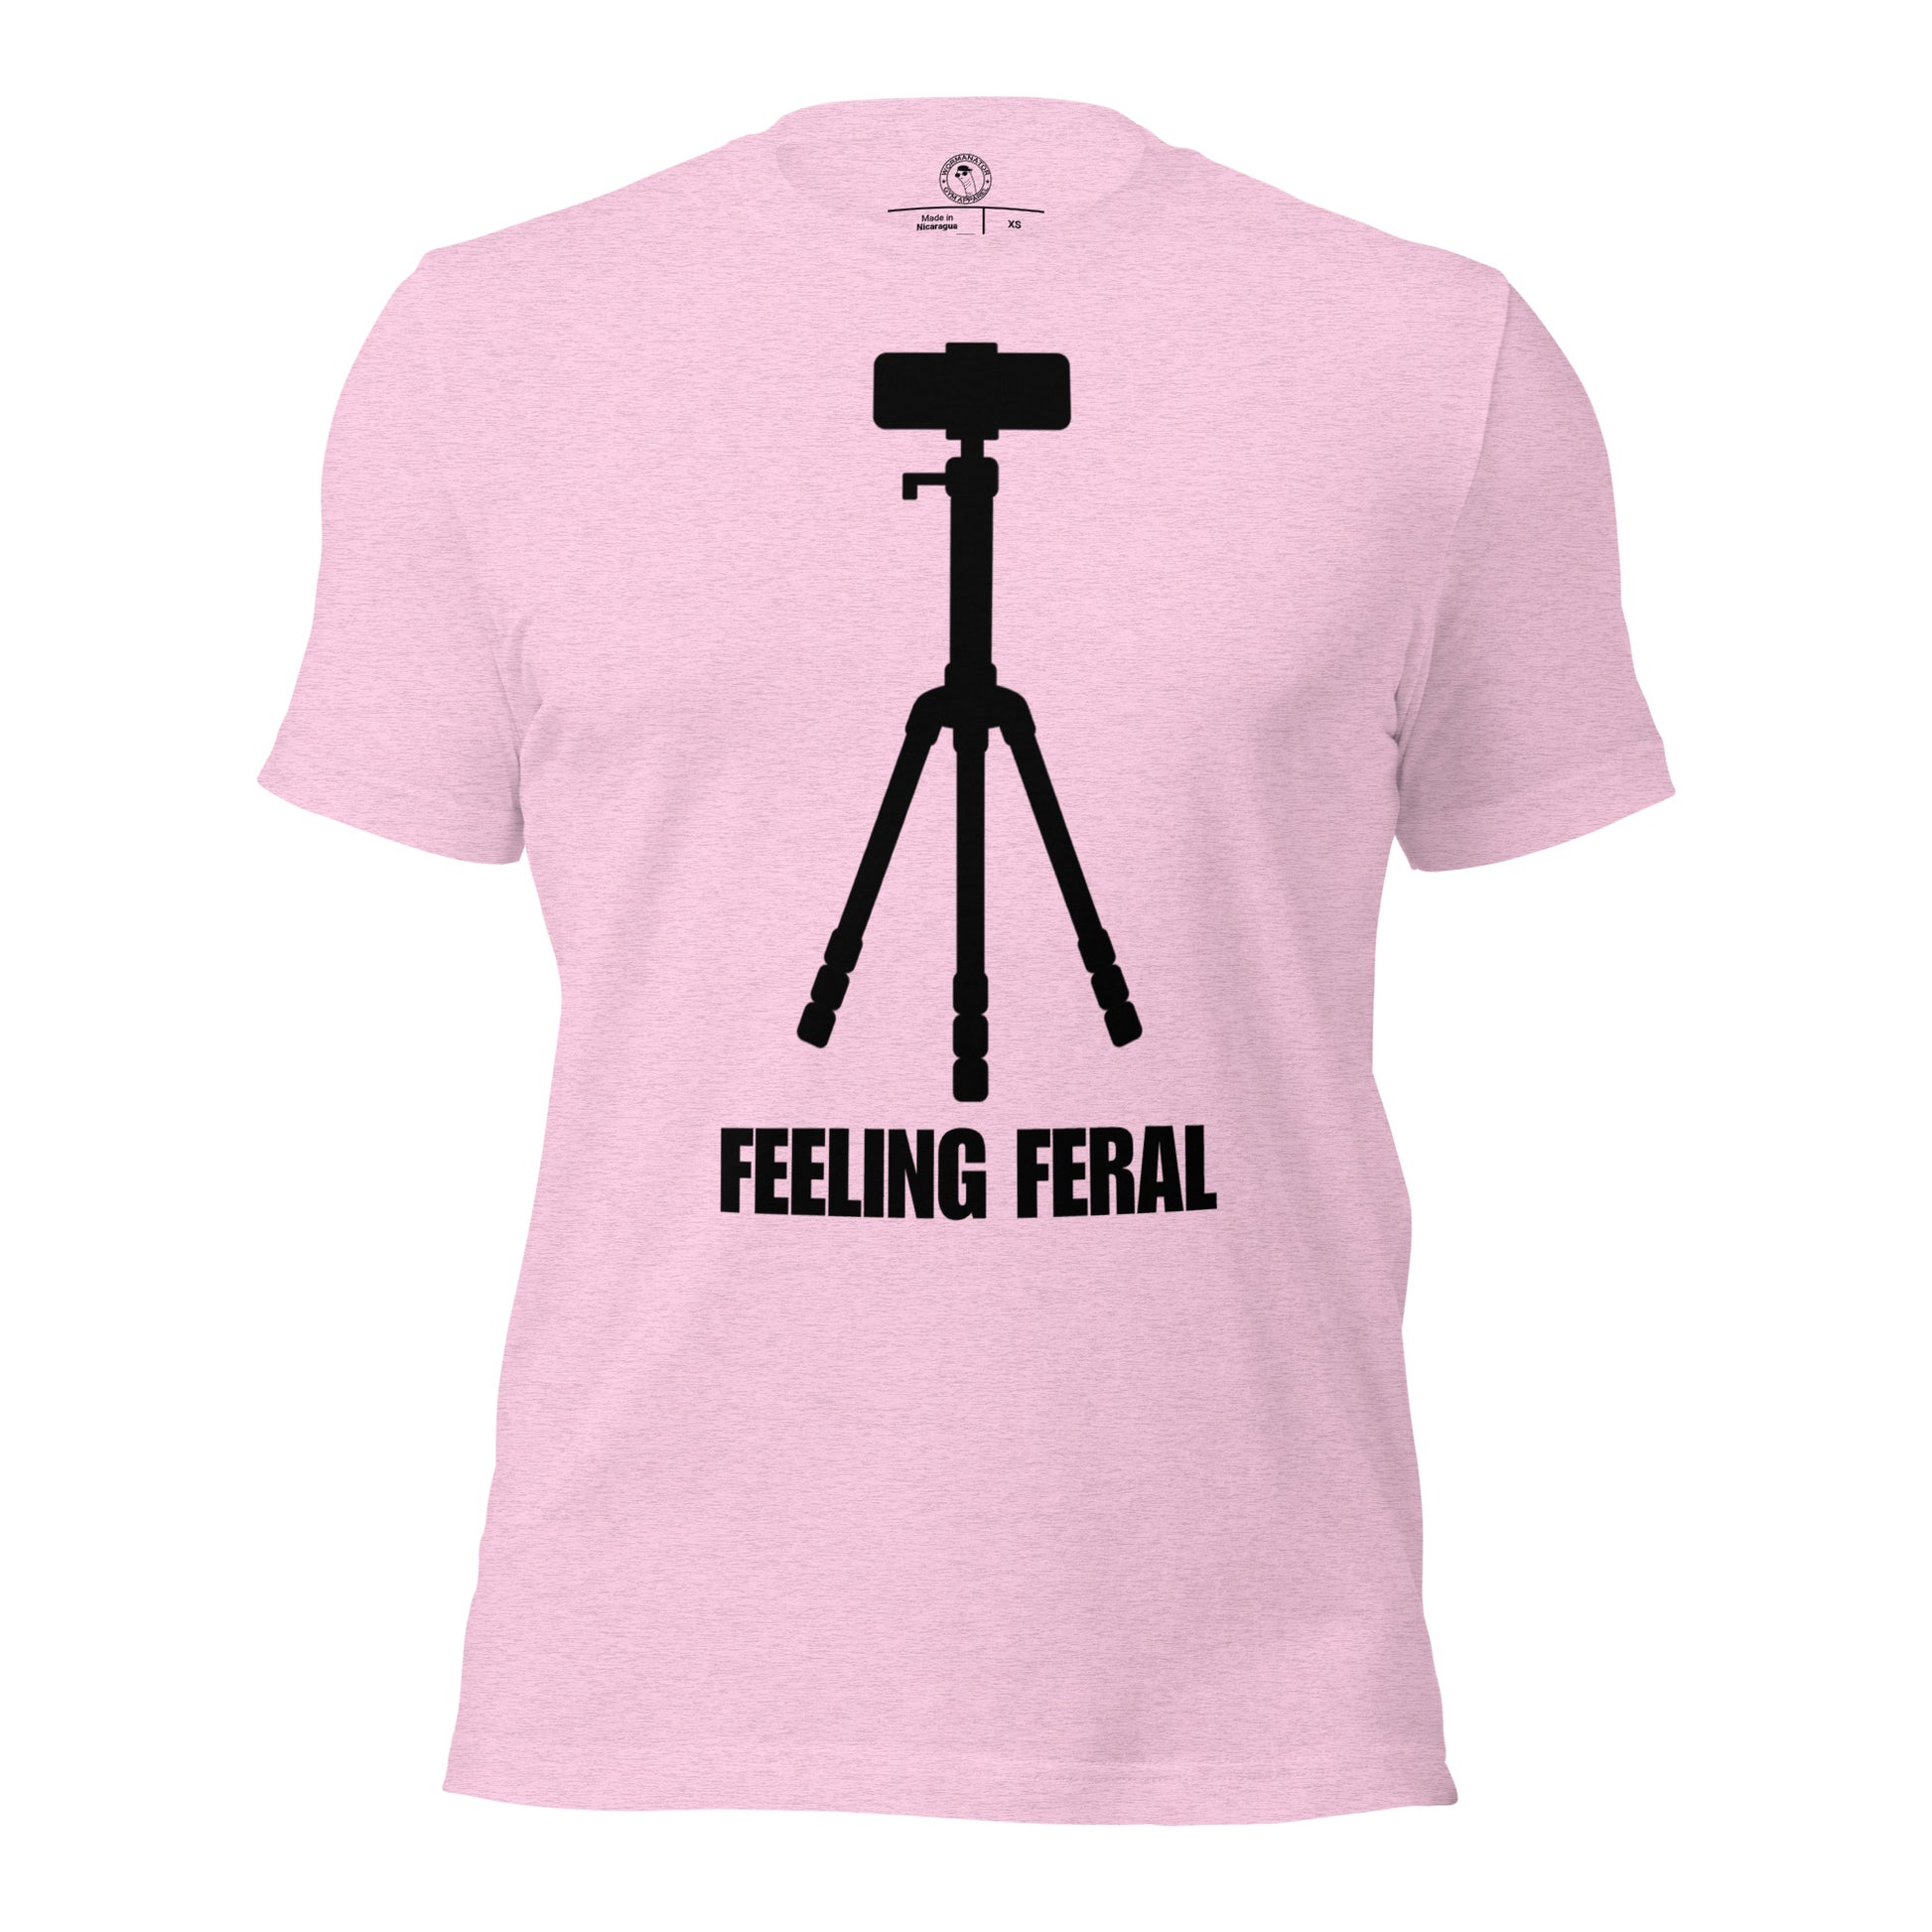 Feeling Feral Gym Shirt in Heather Prism Lilac